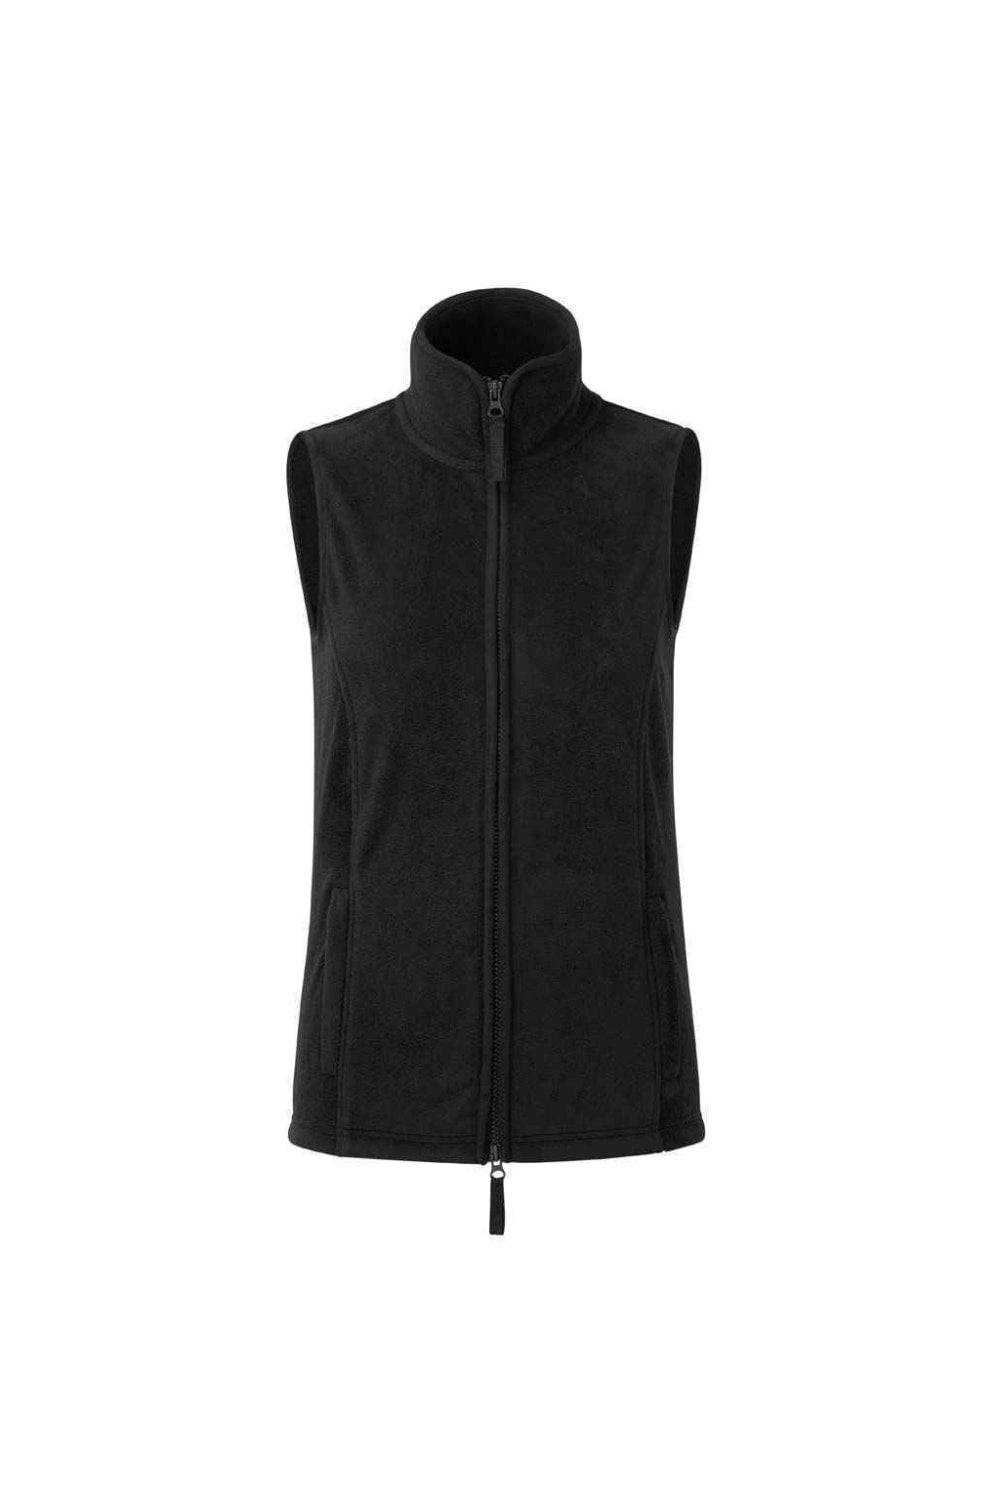 Womens/Ladies Artisan Fleece Vest - Black